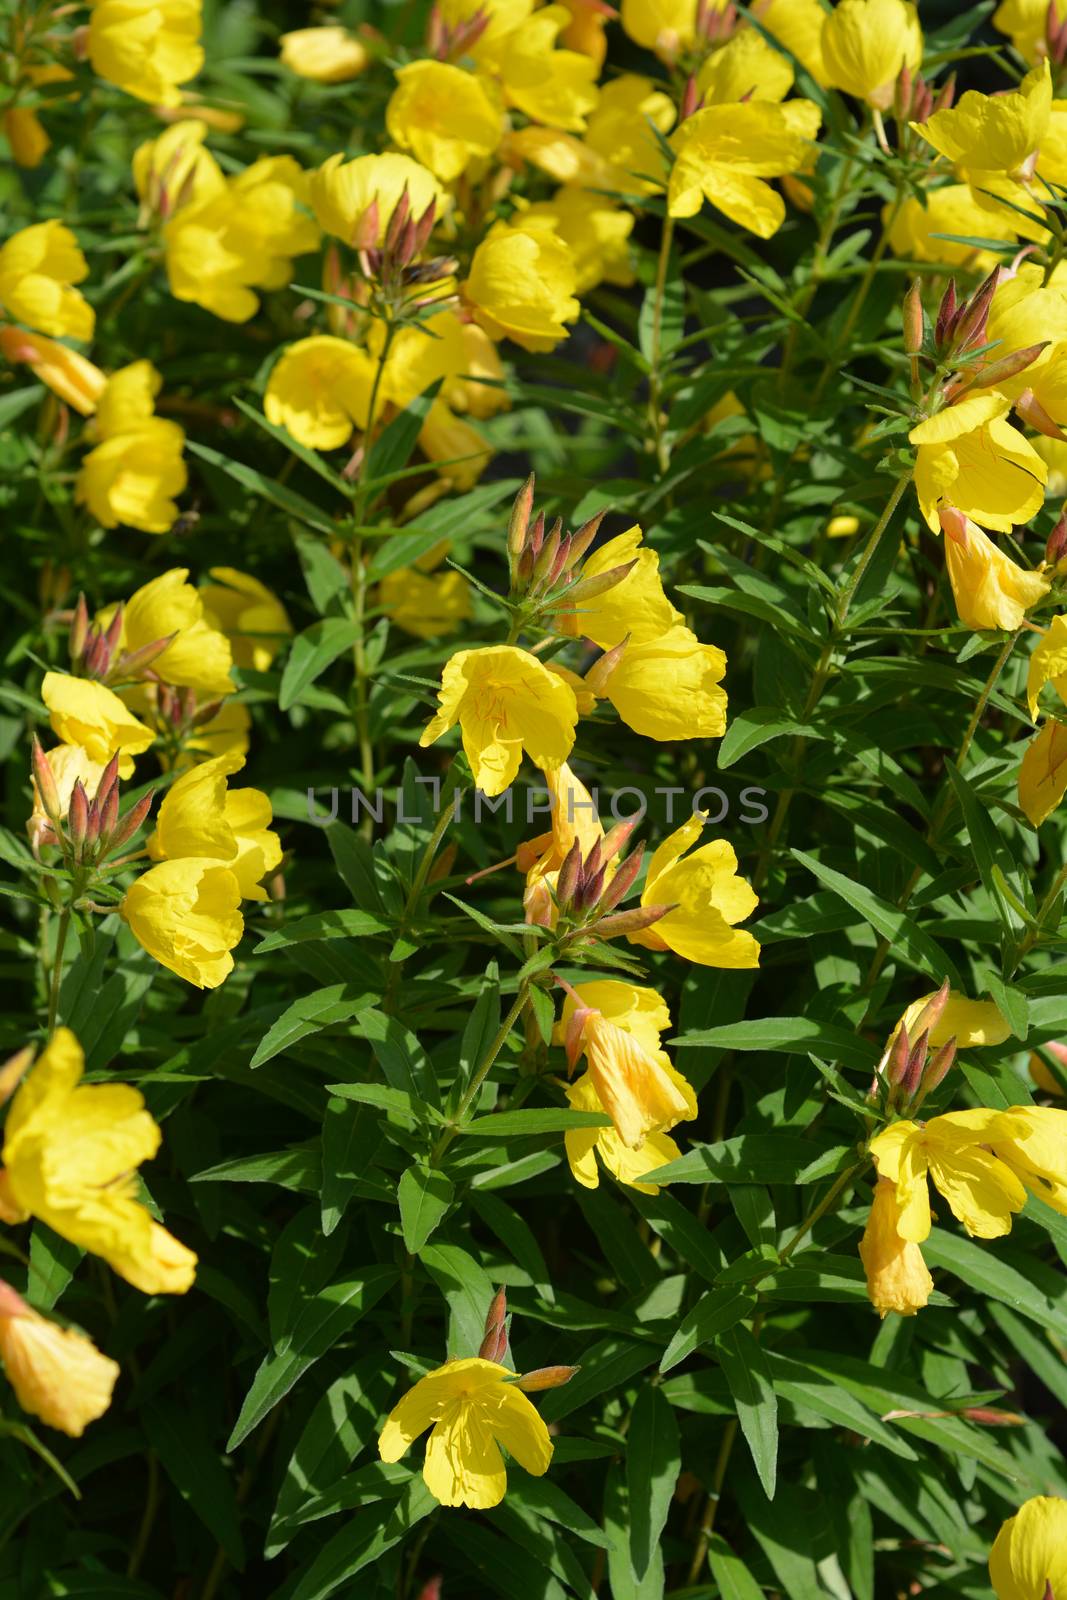 Narrowleaf evening primrose - Latin name - Oenothera fruticosa